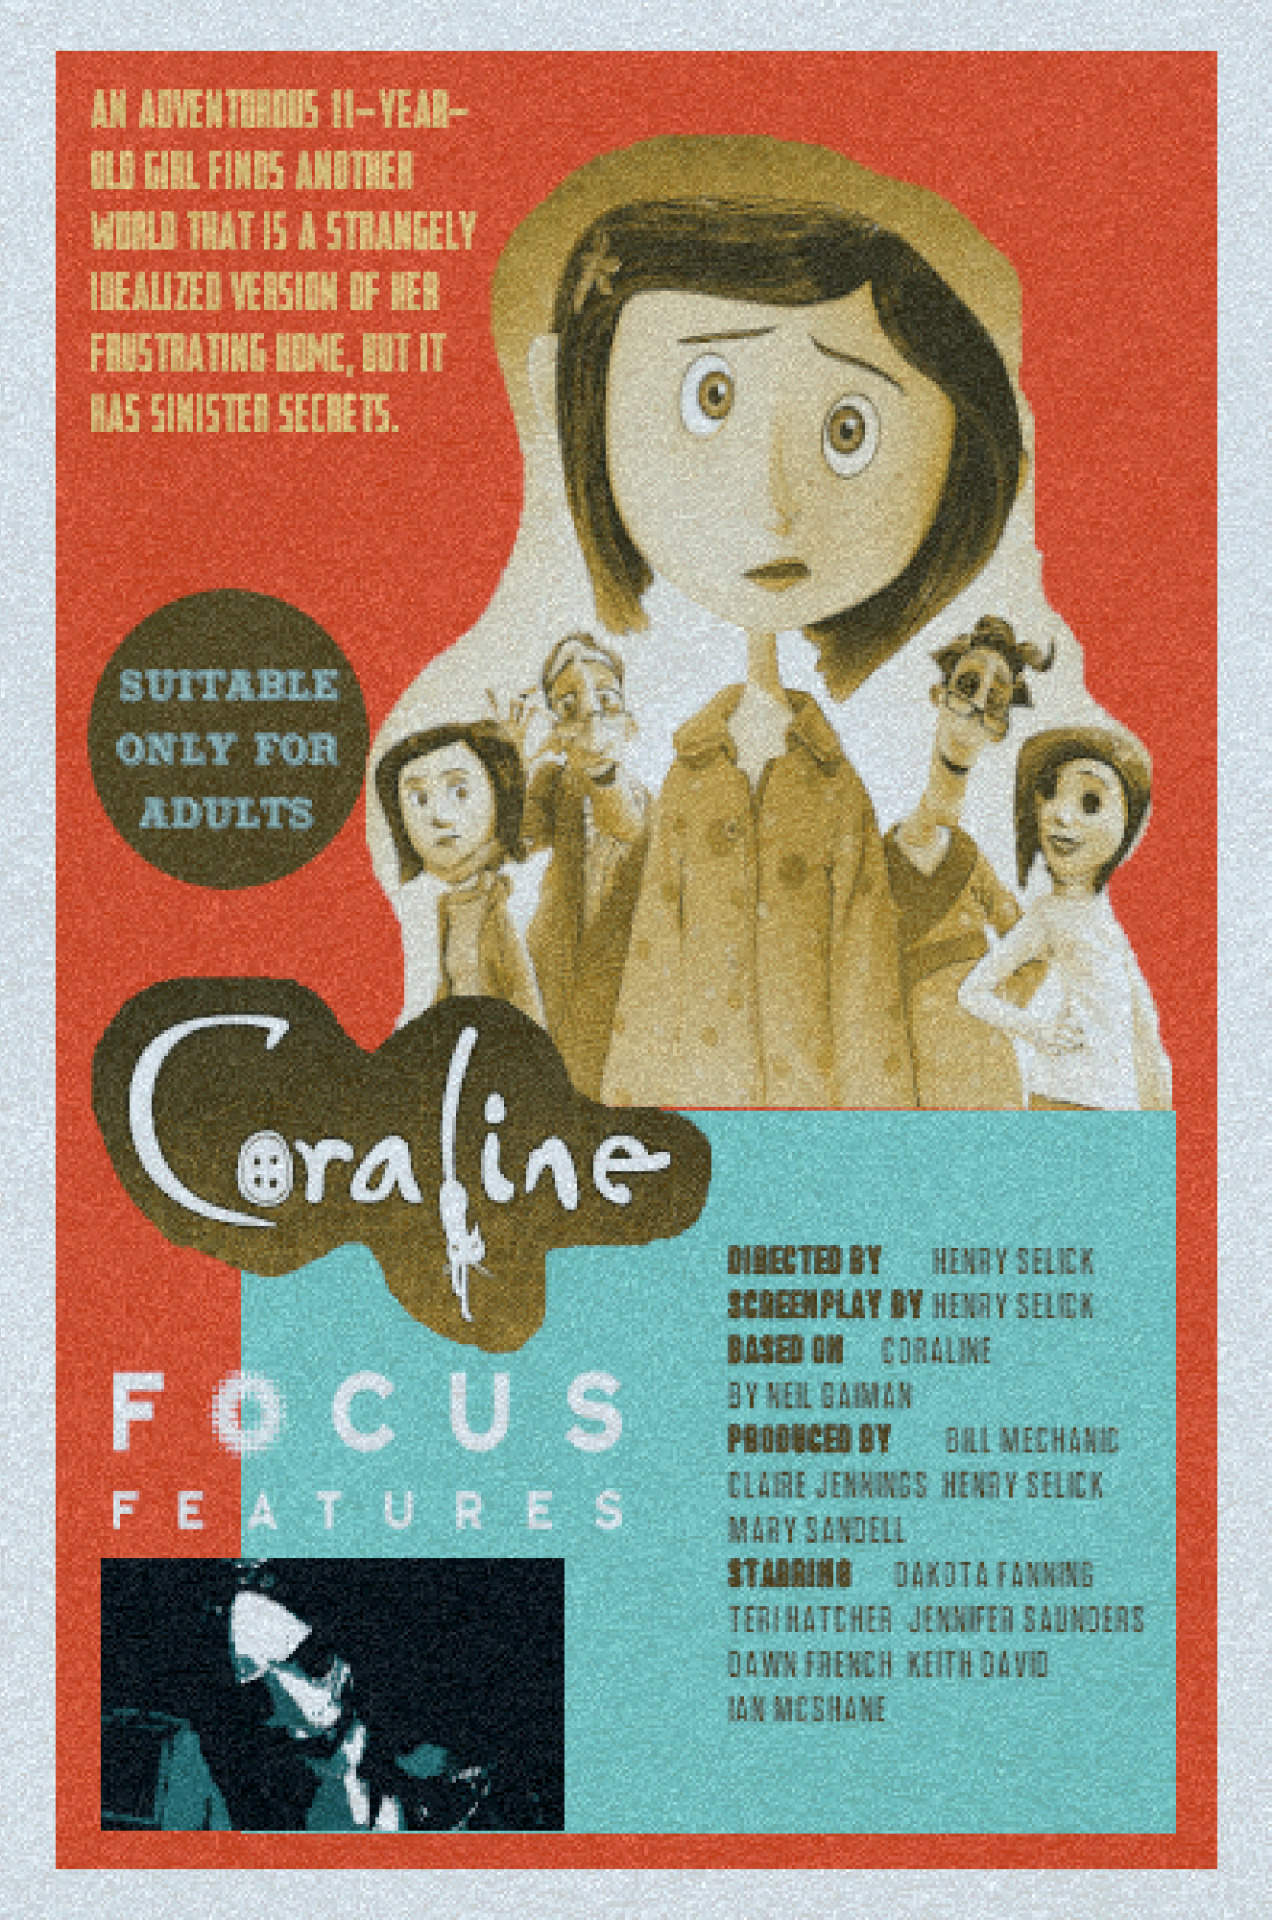 Coraline Movie Posters :: Behance